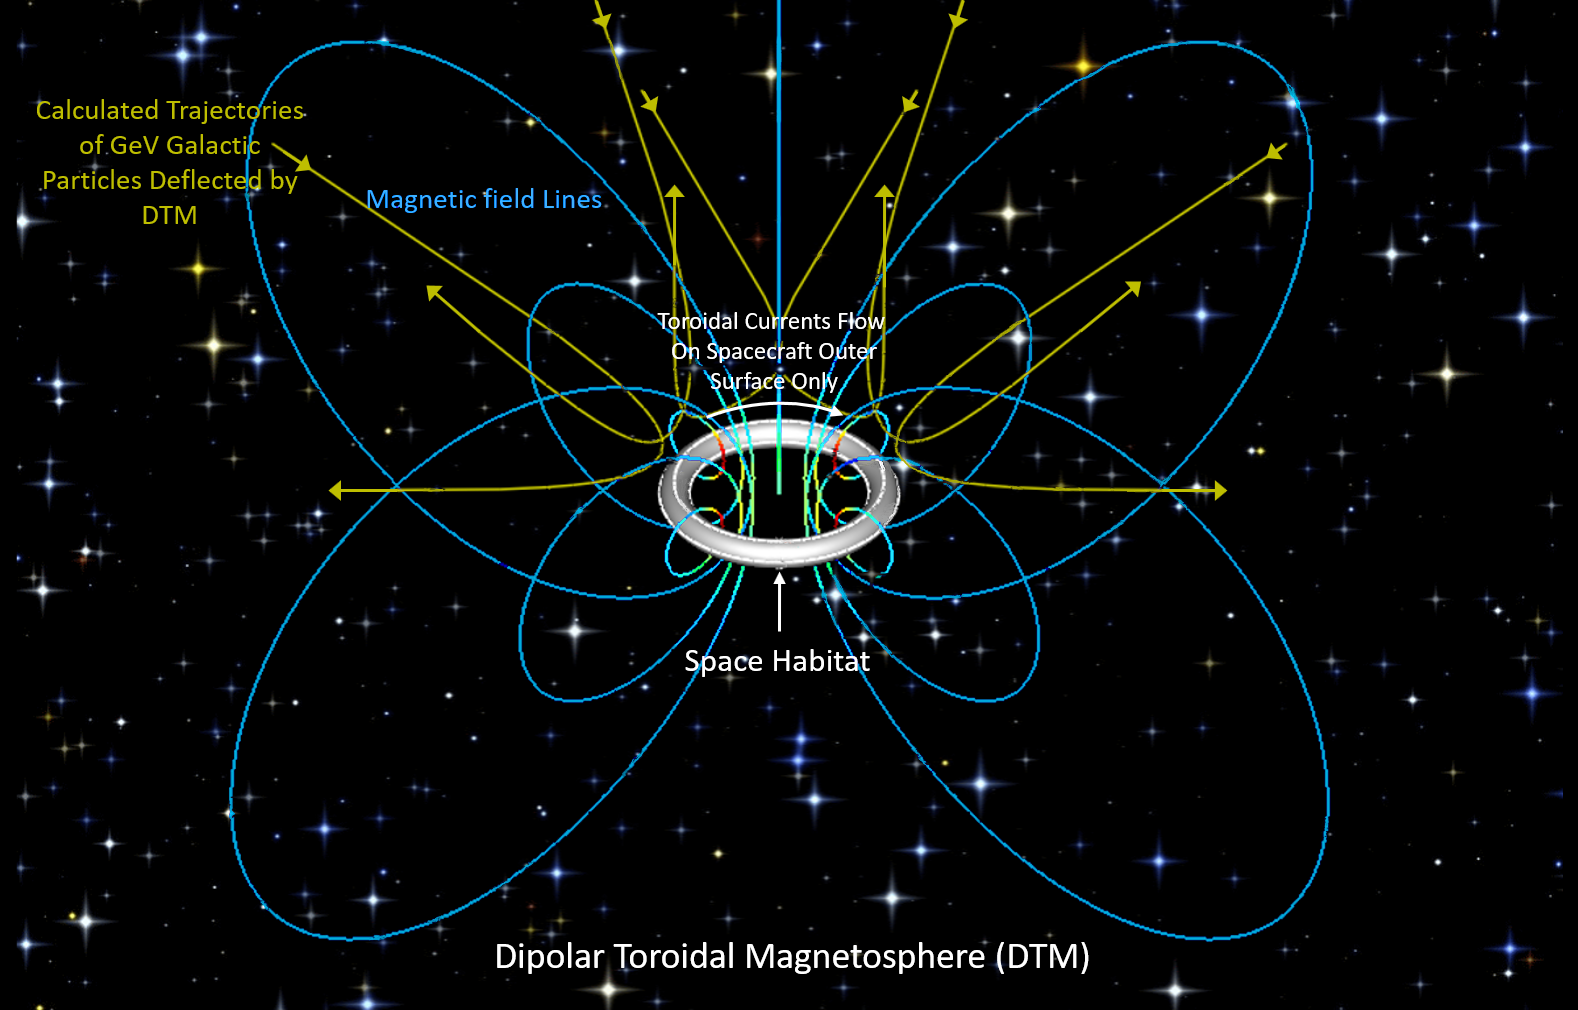 Dipolar Toroidal Magnetosphere (DTM)